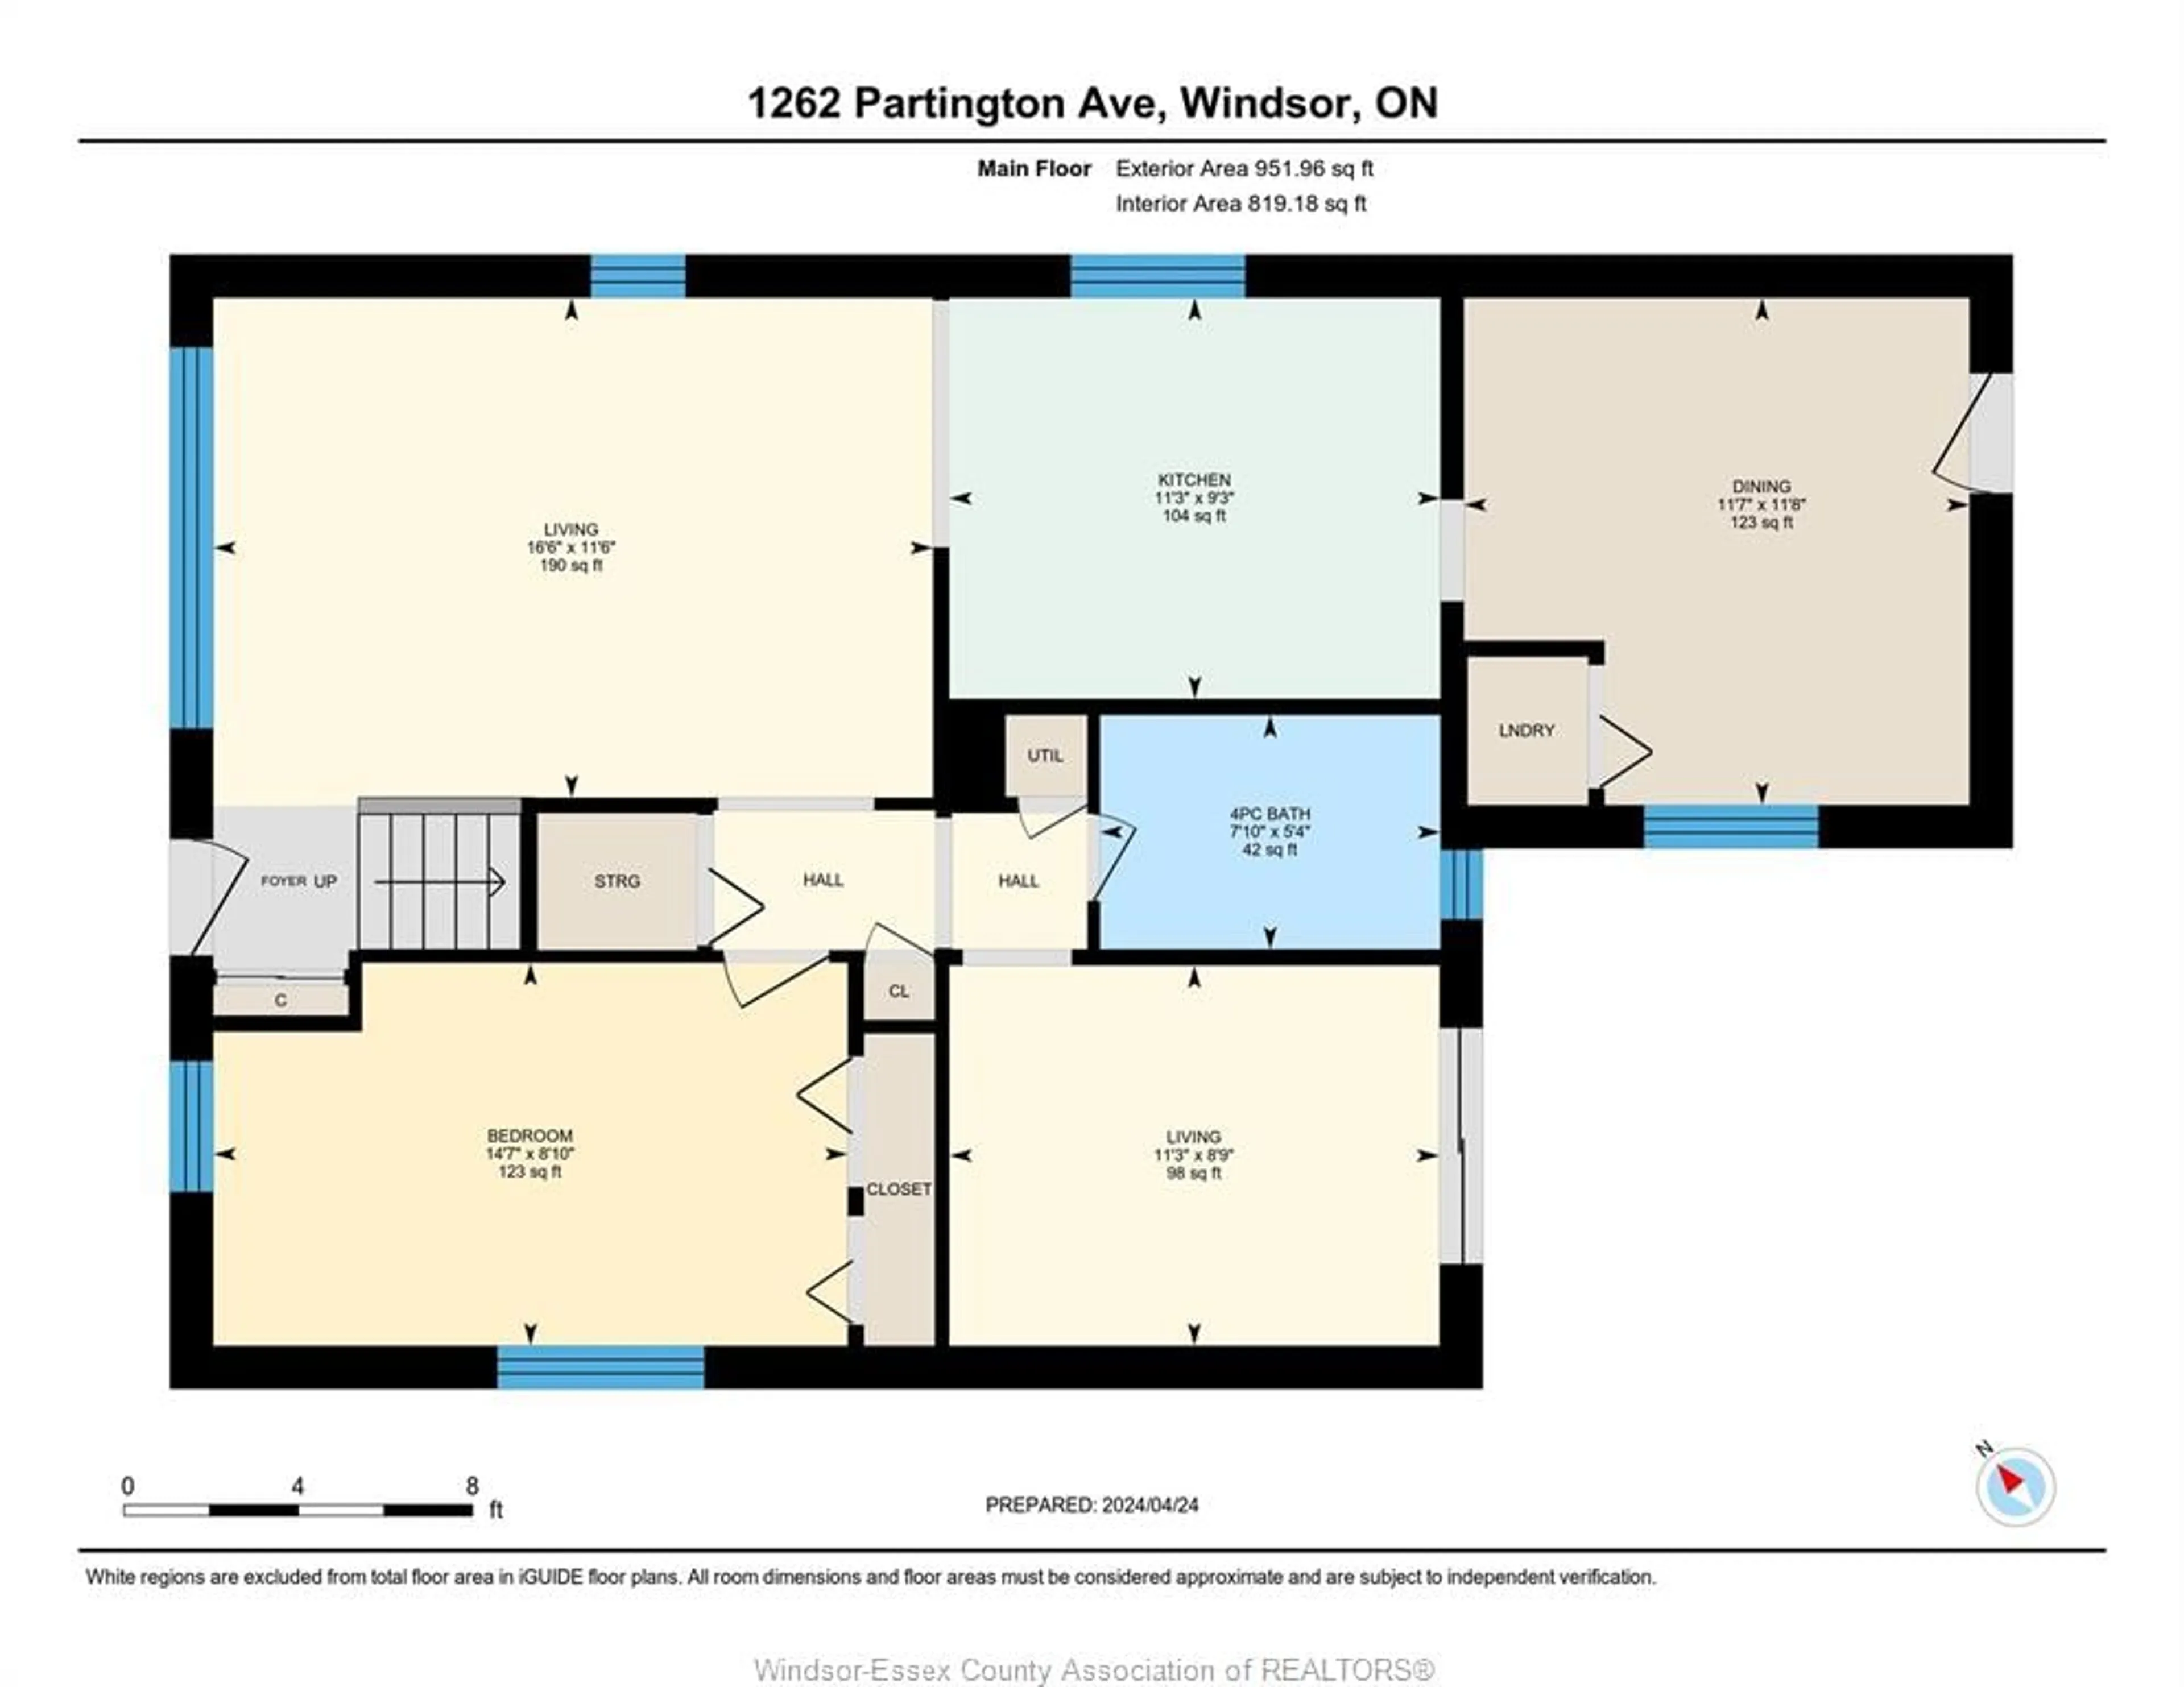 Floor plan for 1262 Partington Ave, Windsor Ontario N9B 2P4